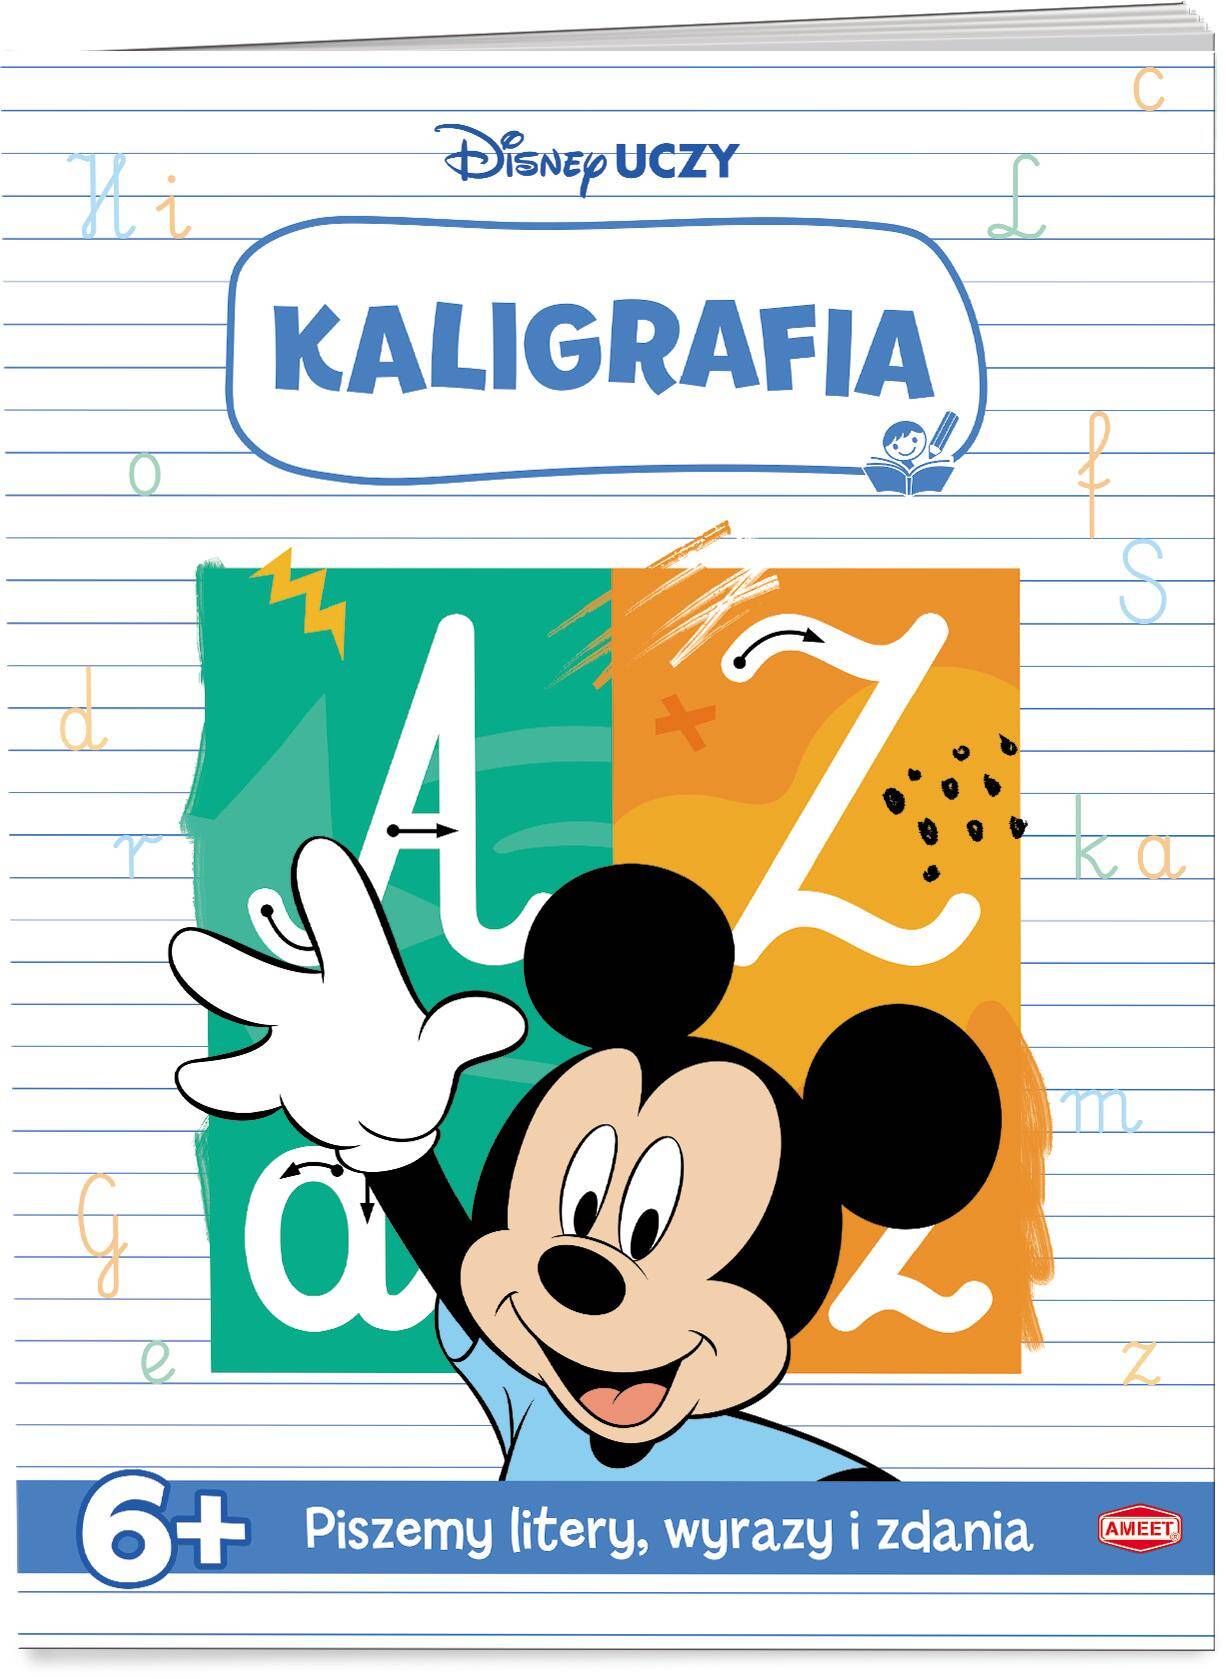 Disney uczy Miki Kaligrafia UKA-9301